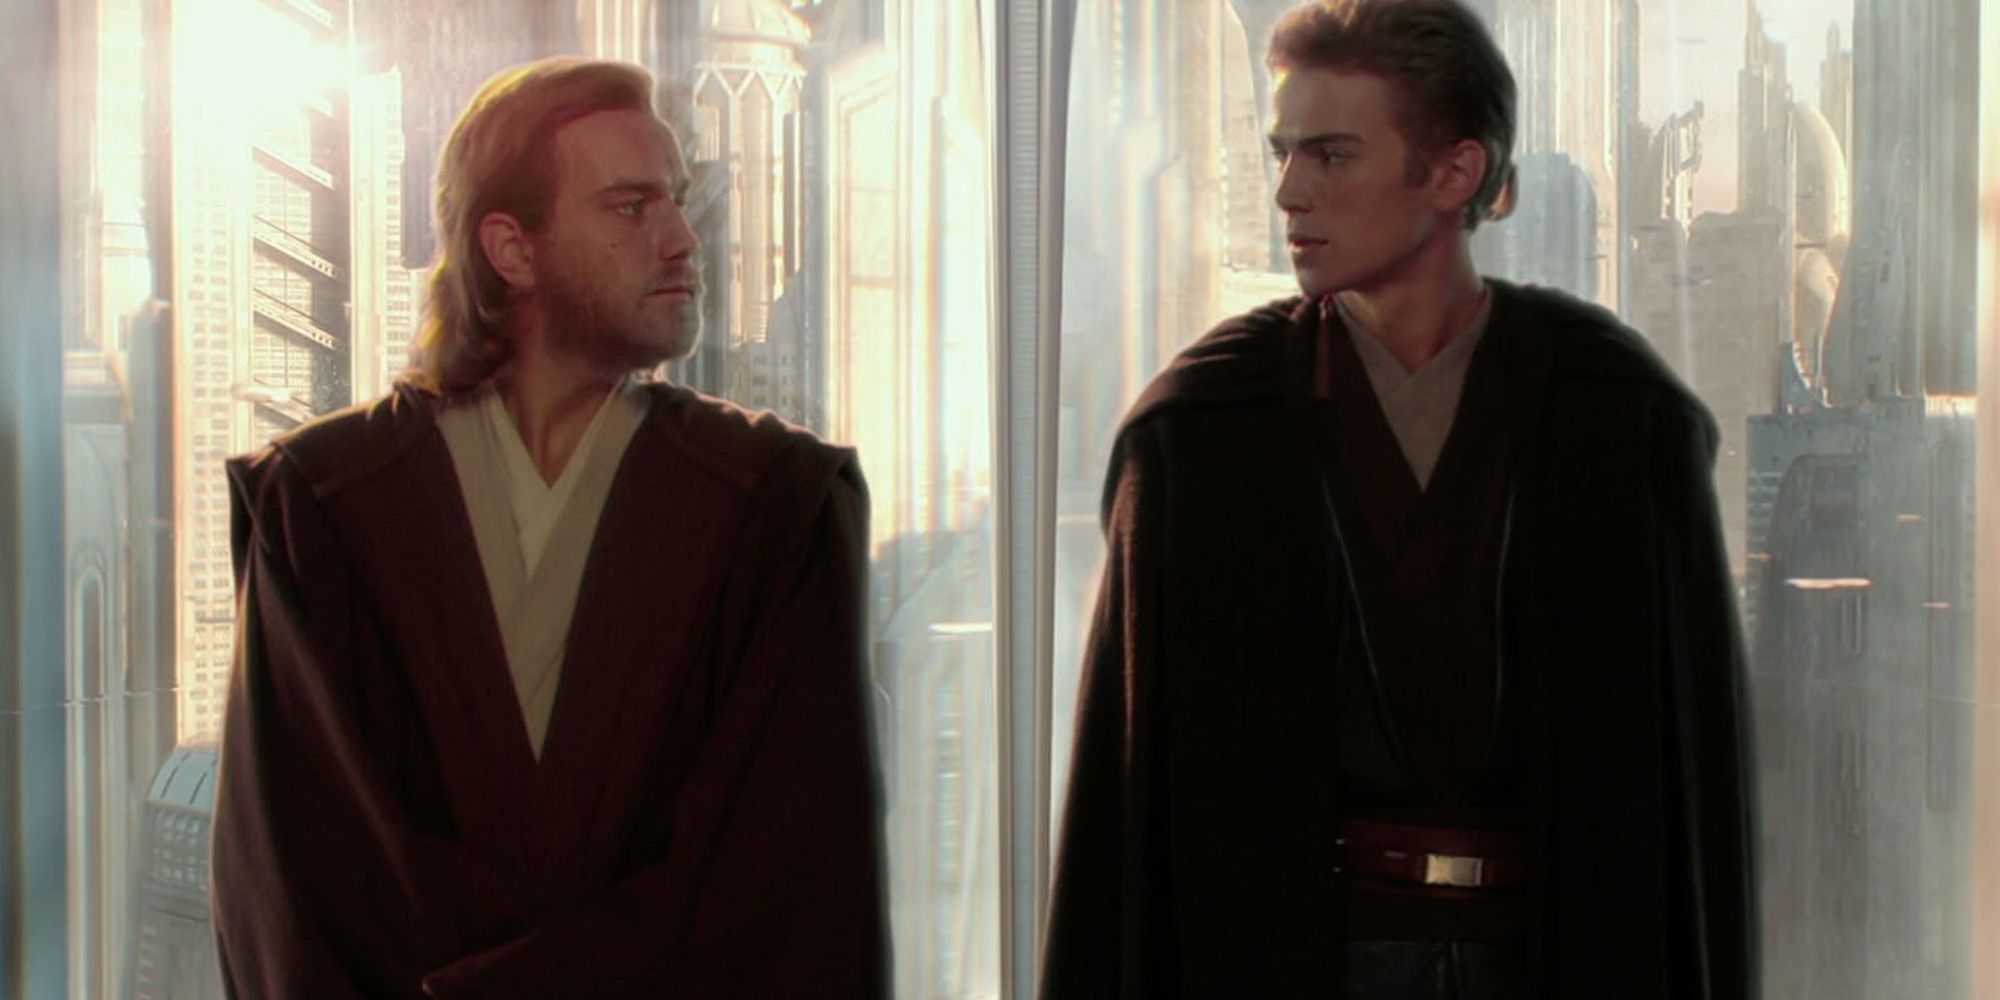 Obi-Wan Kenobi And Anakin Skywalker in Star Wars Attack of the Clones